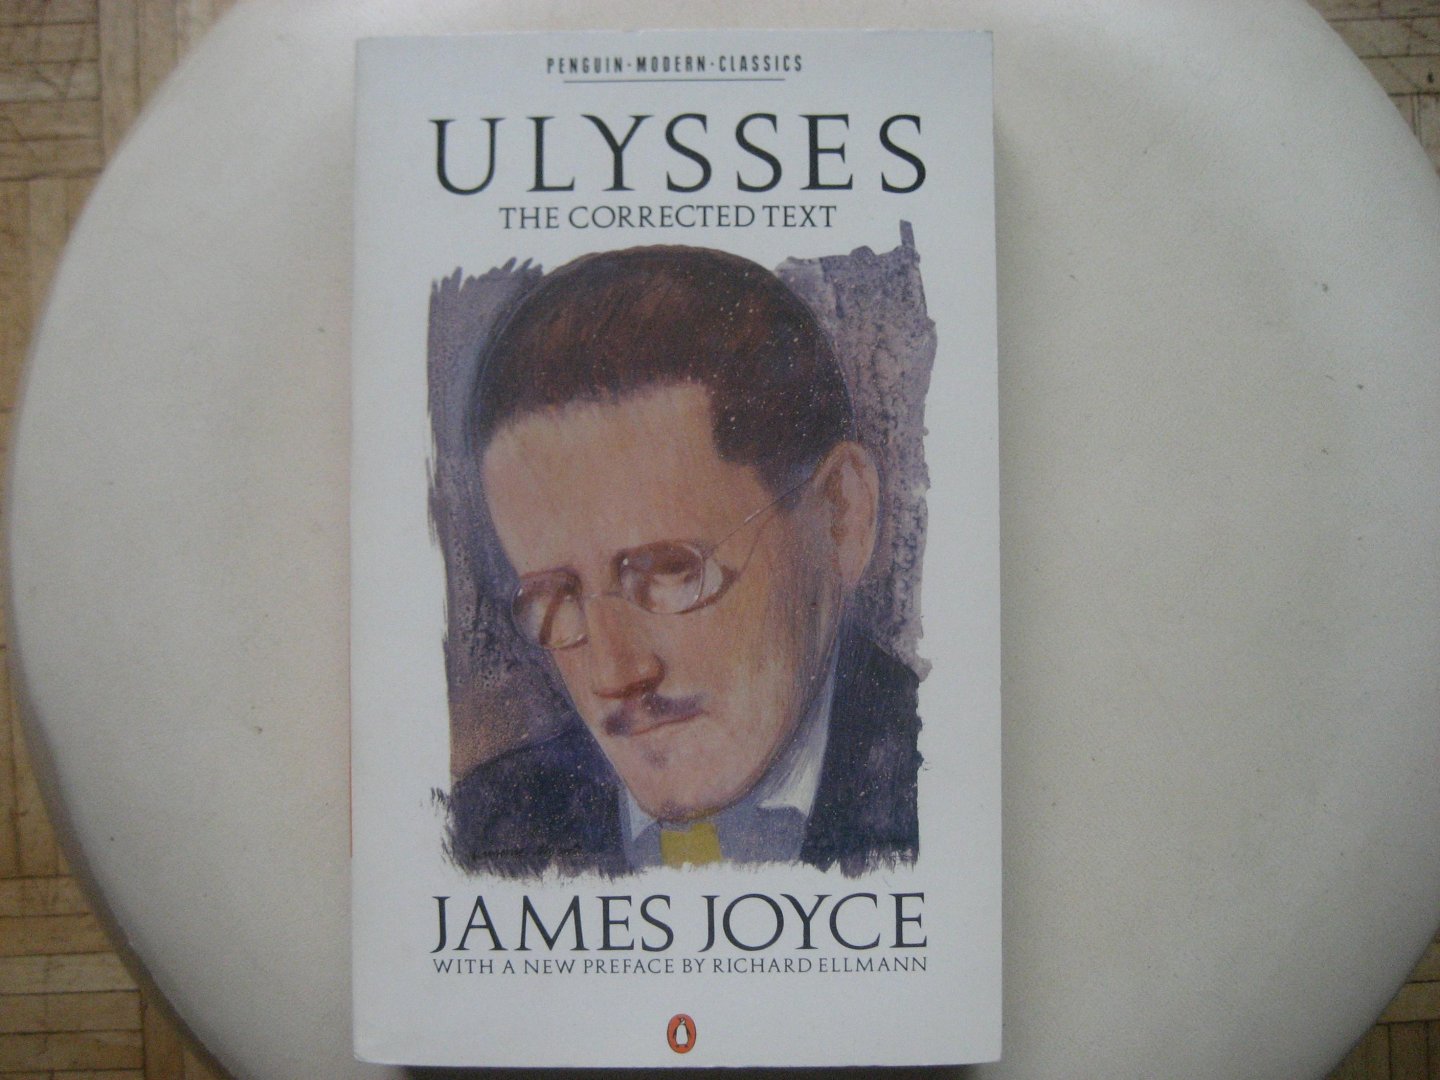 James Joyce ( with a new preface by Richard Ellmann ) - Ulysses / The corrected text